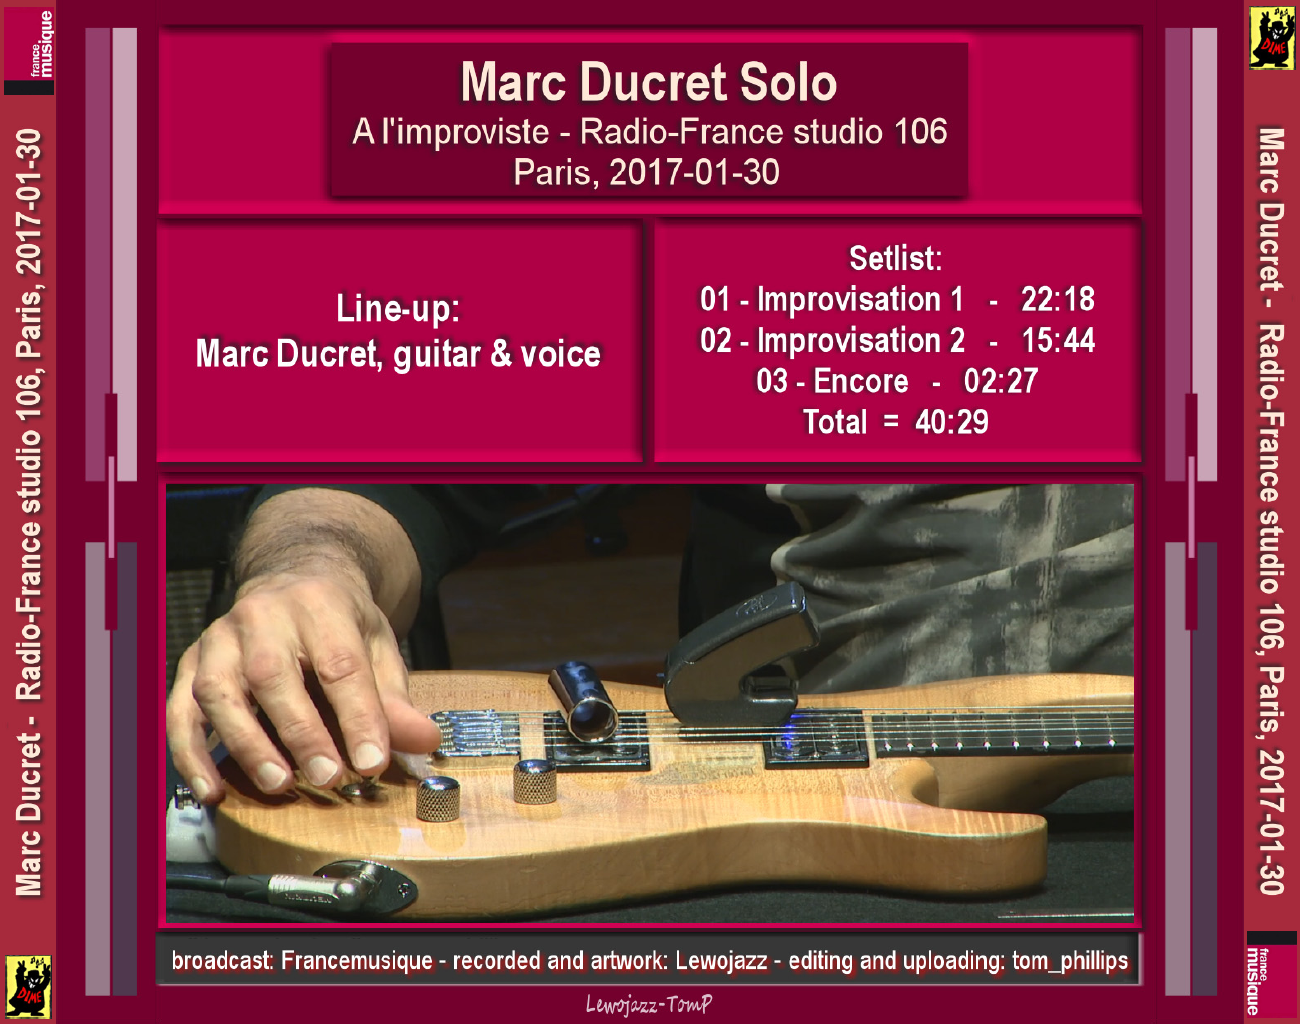 MarcDucret2017-01-30SoloStudio106RadioFrance (4).png